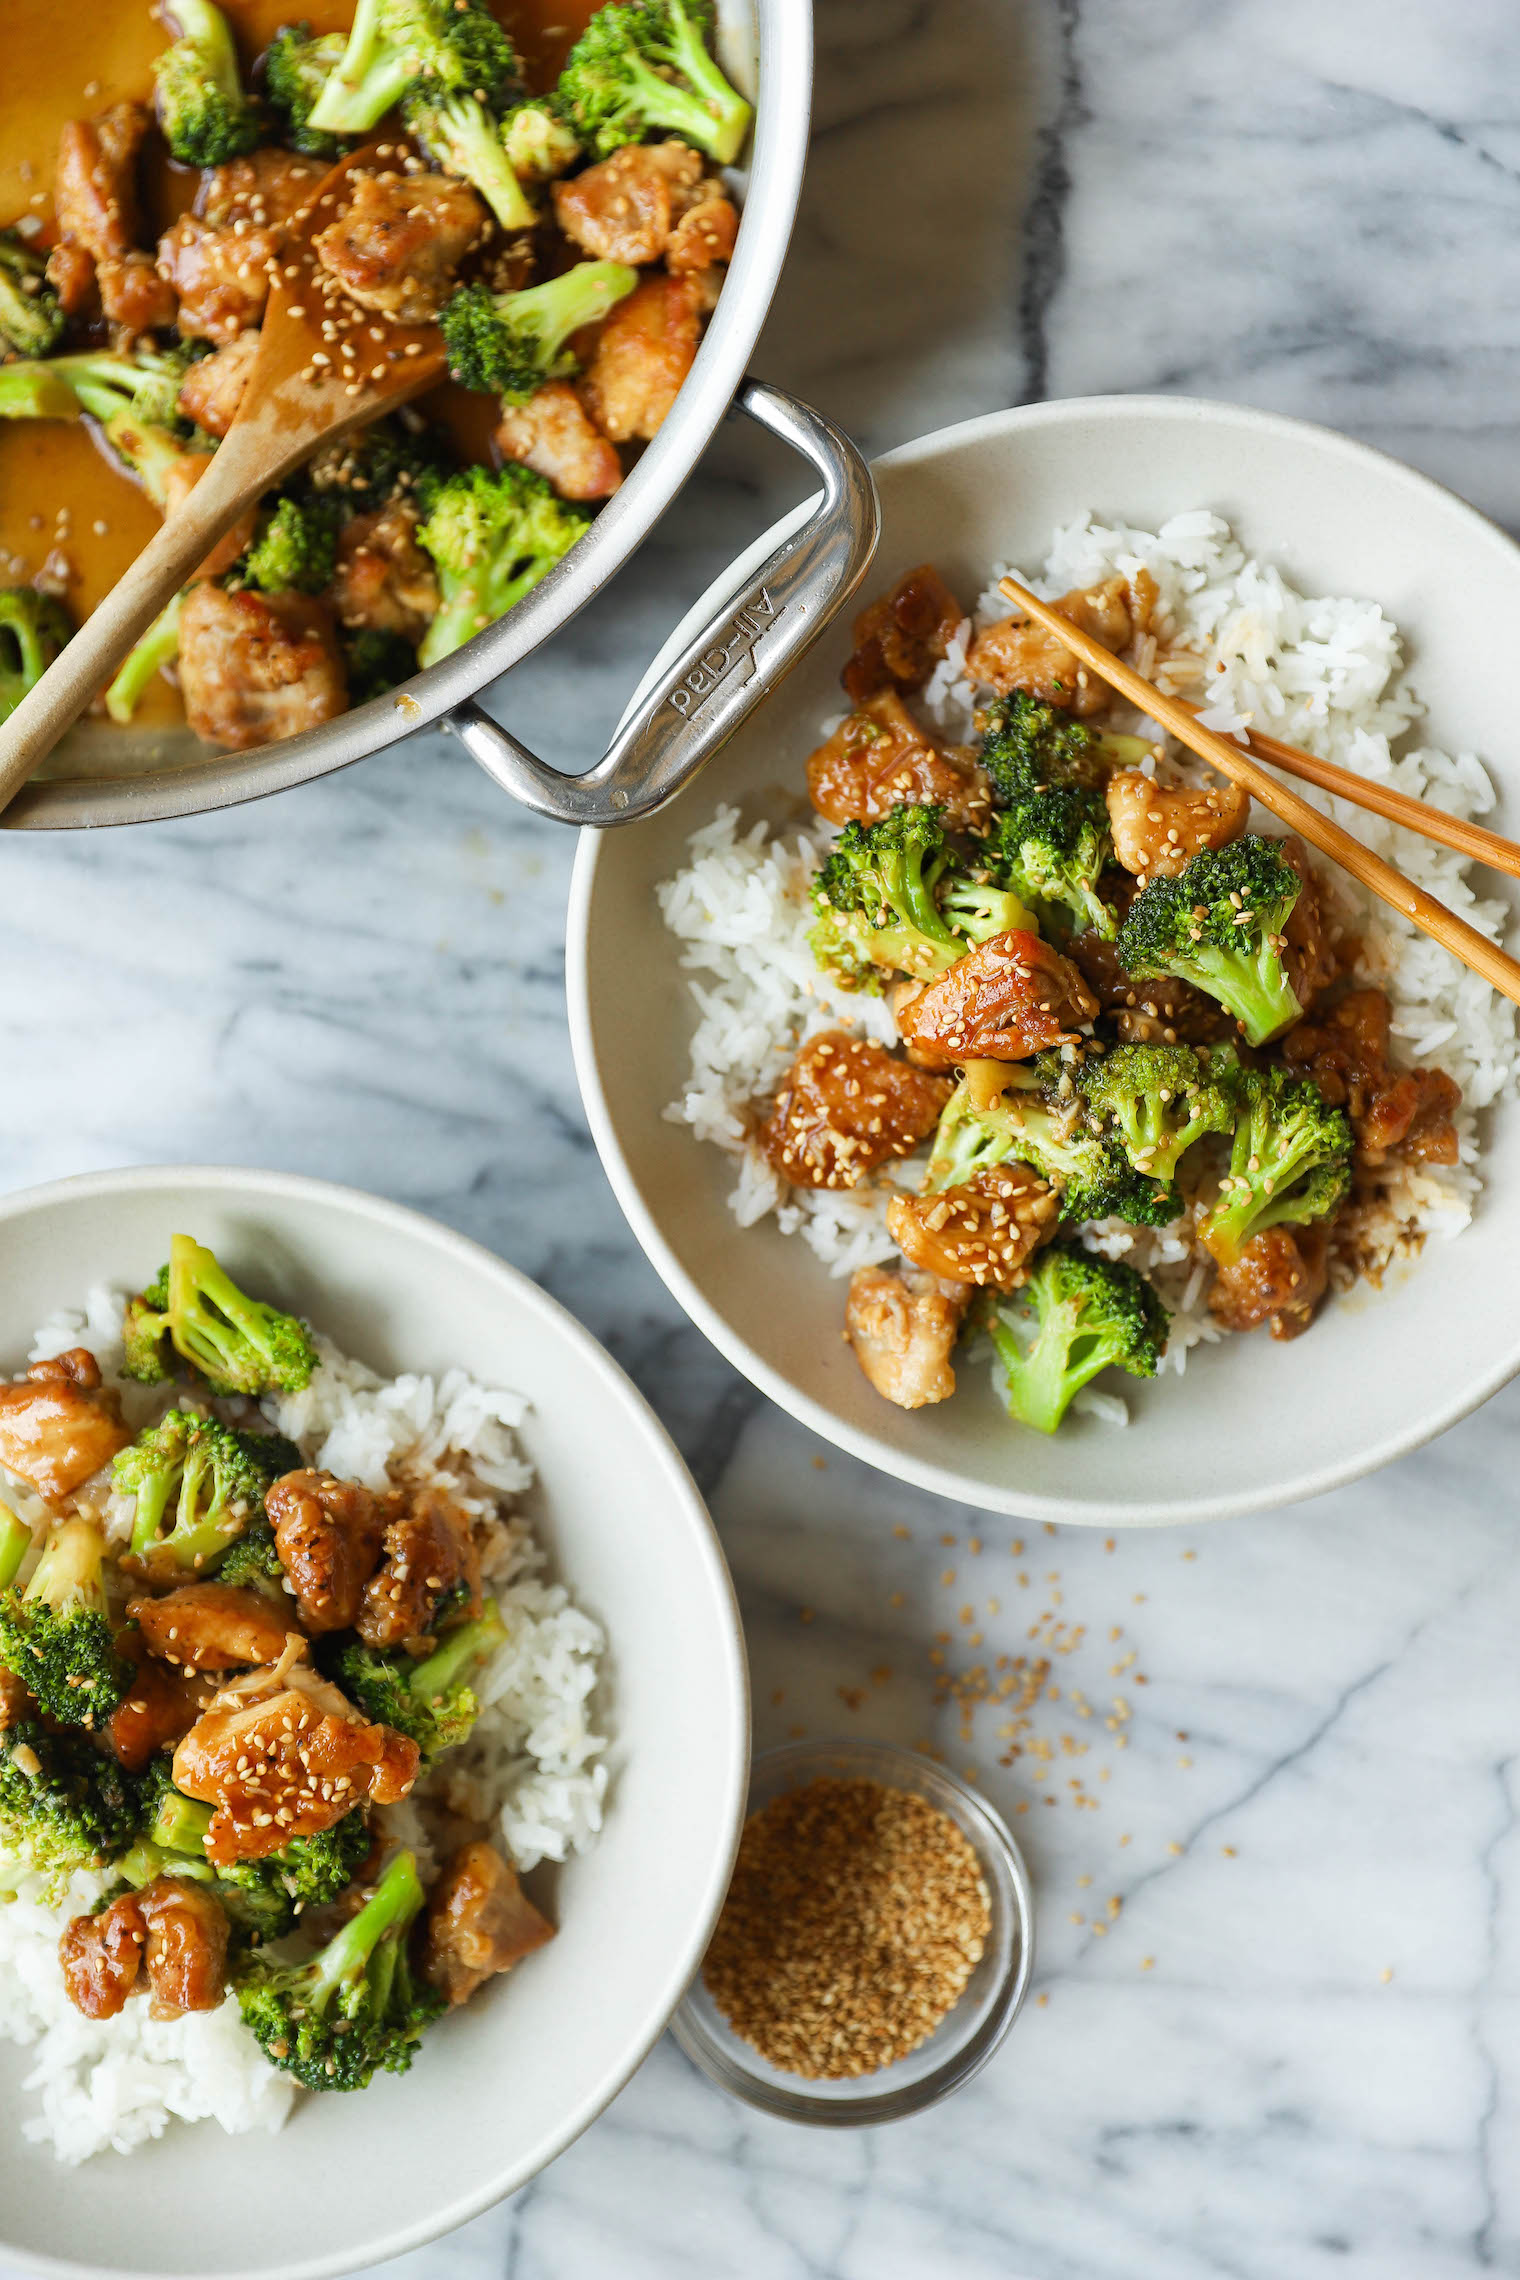 Chicken and Broccoli Stir Fry - Damn Delicious